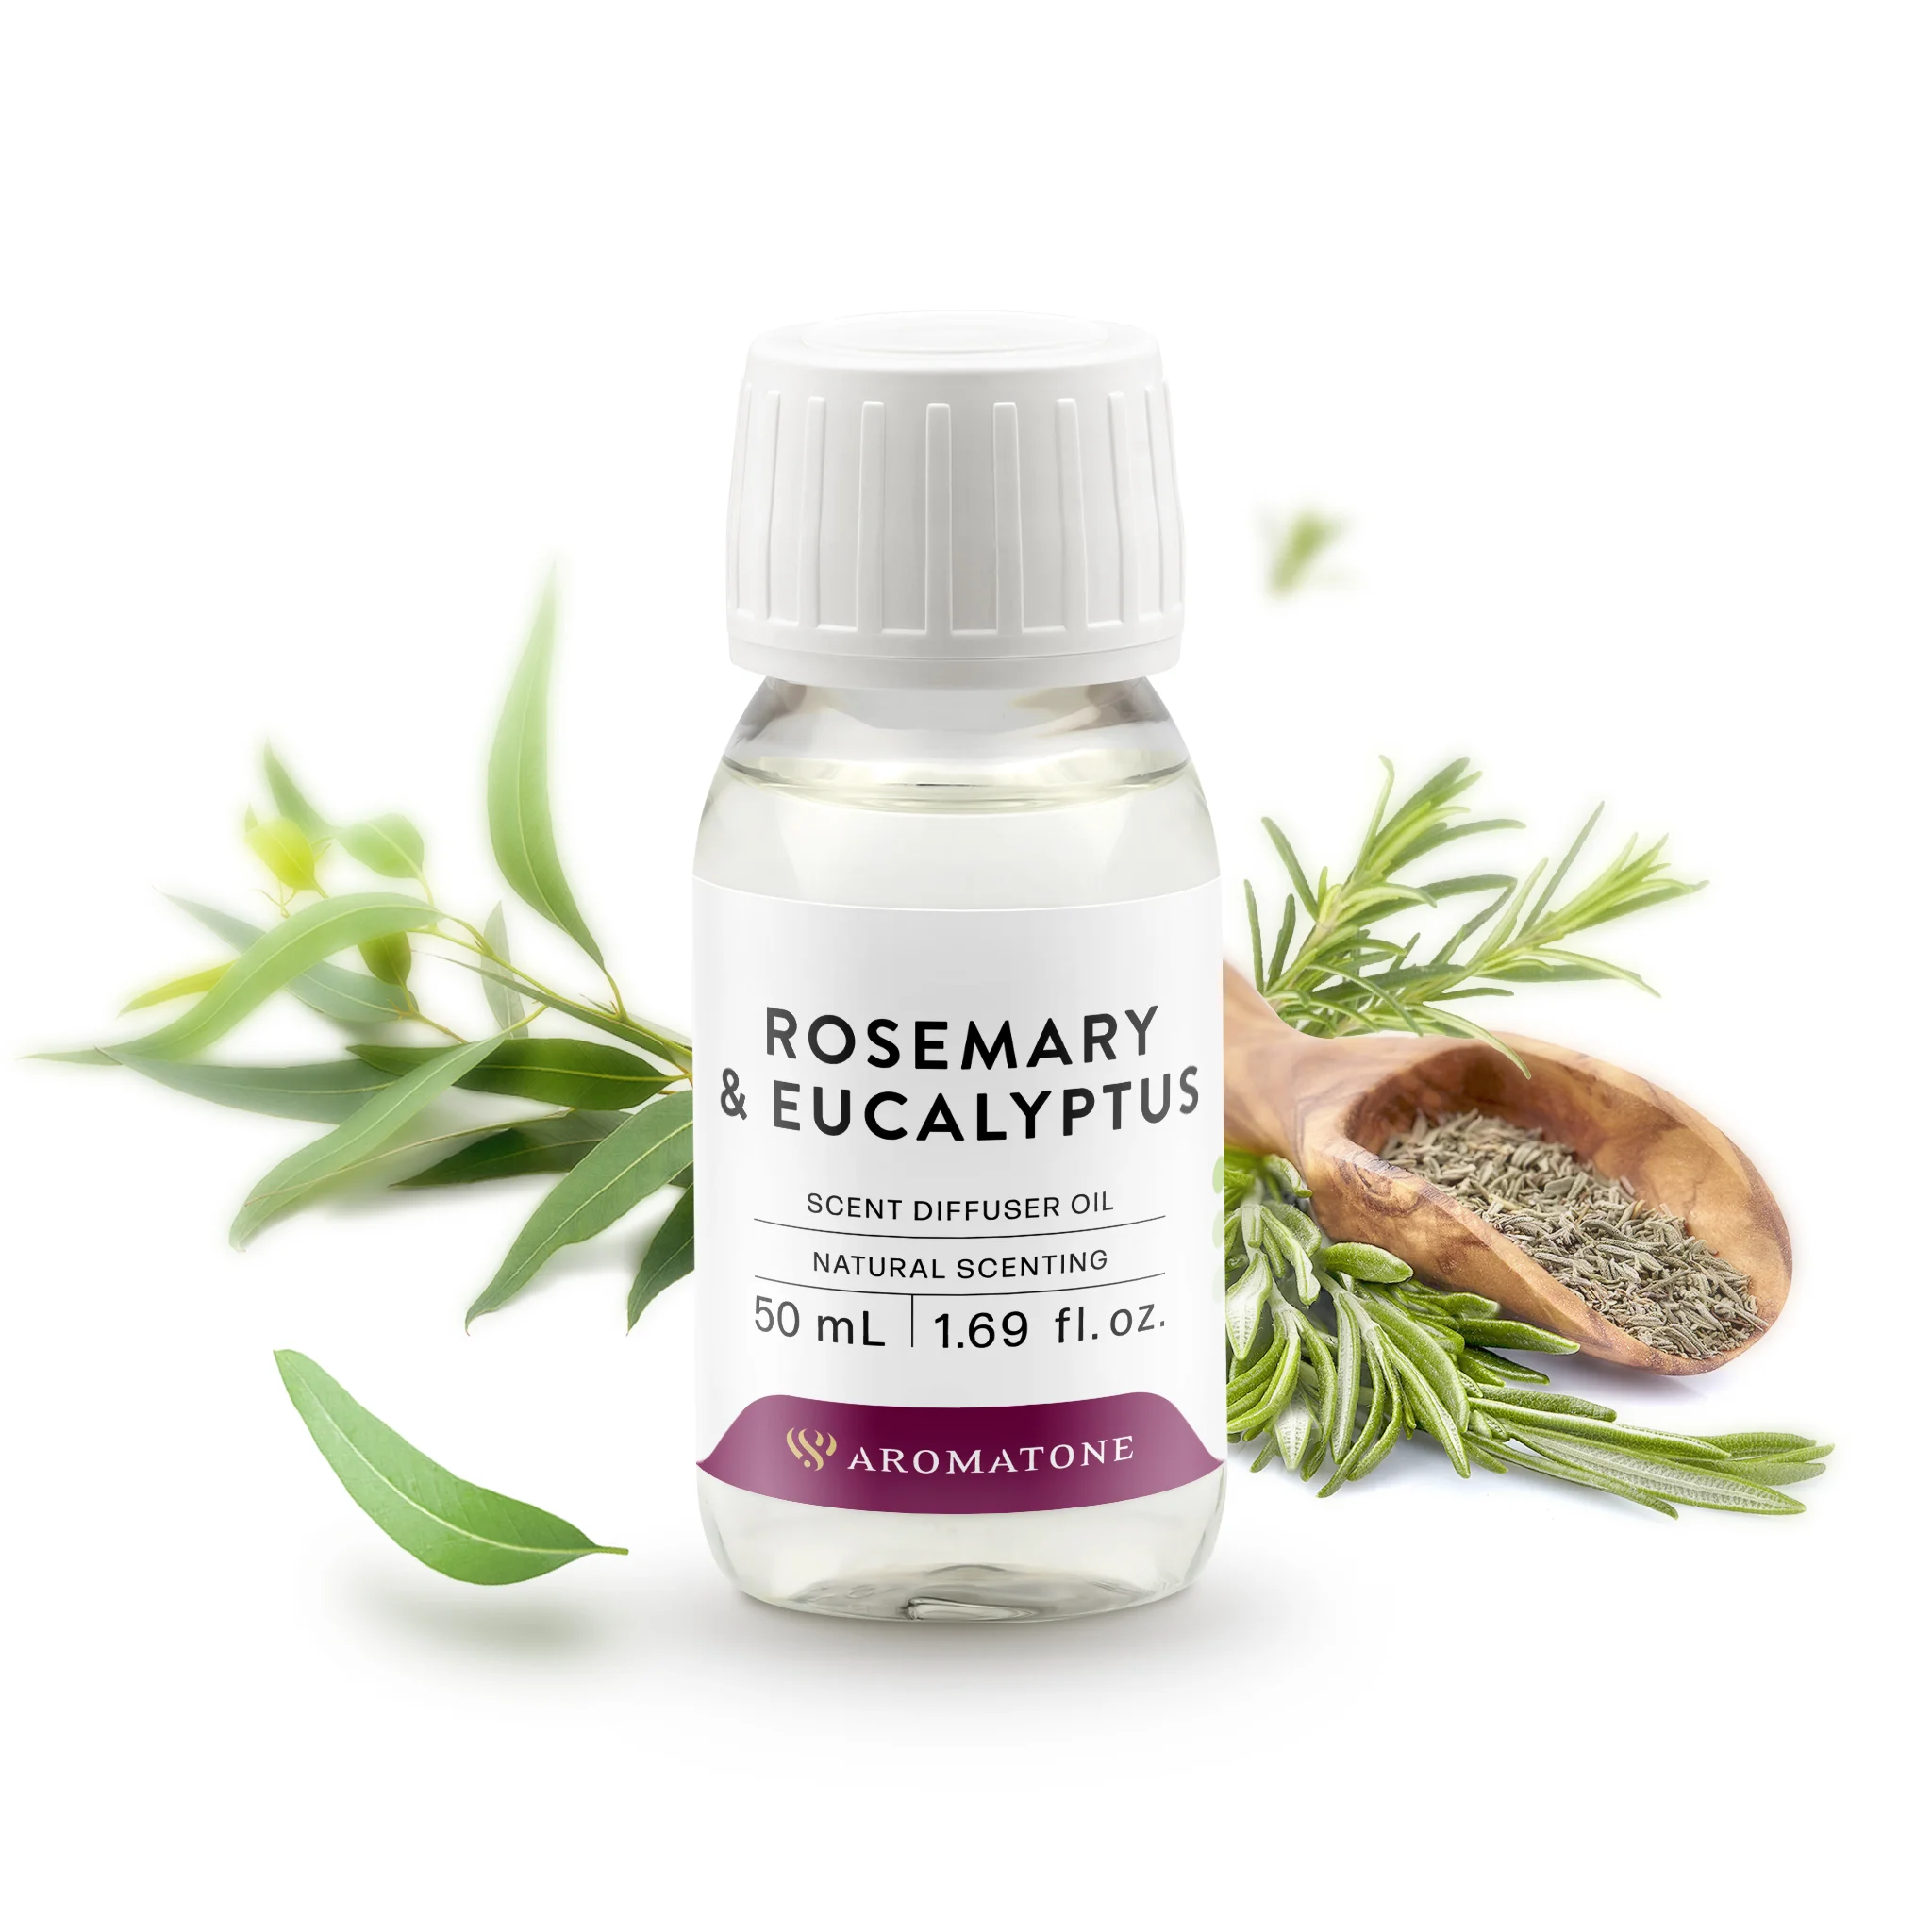 Rosemary & Eucalyptus essential oil